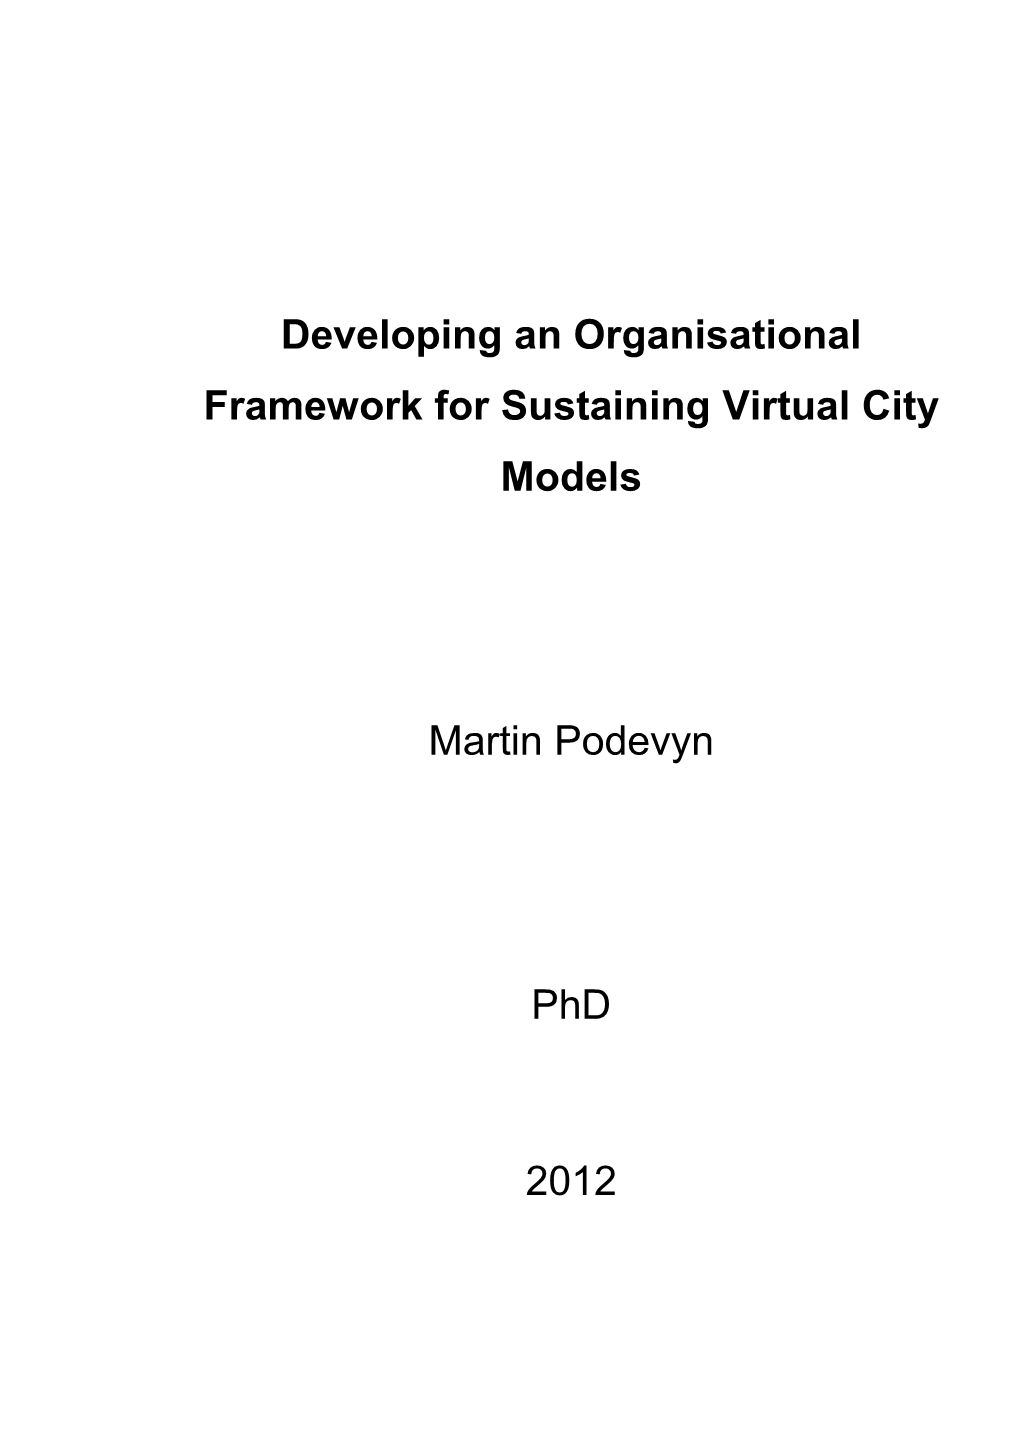 Developing an Organisational Framework for Sustaining Virtual City Models